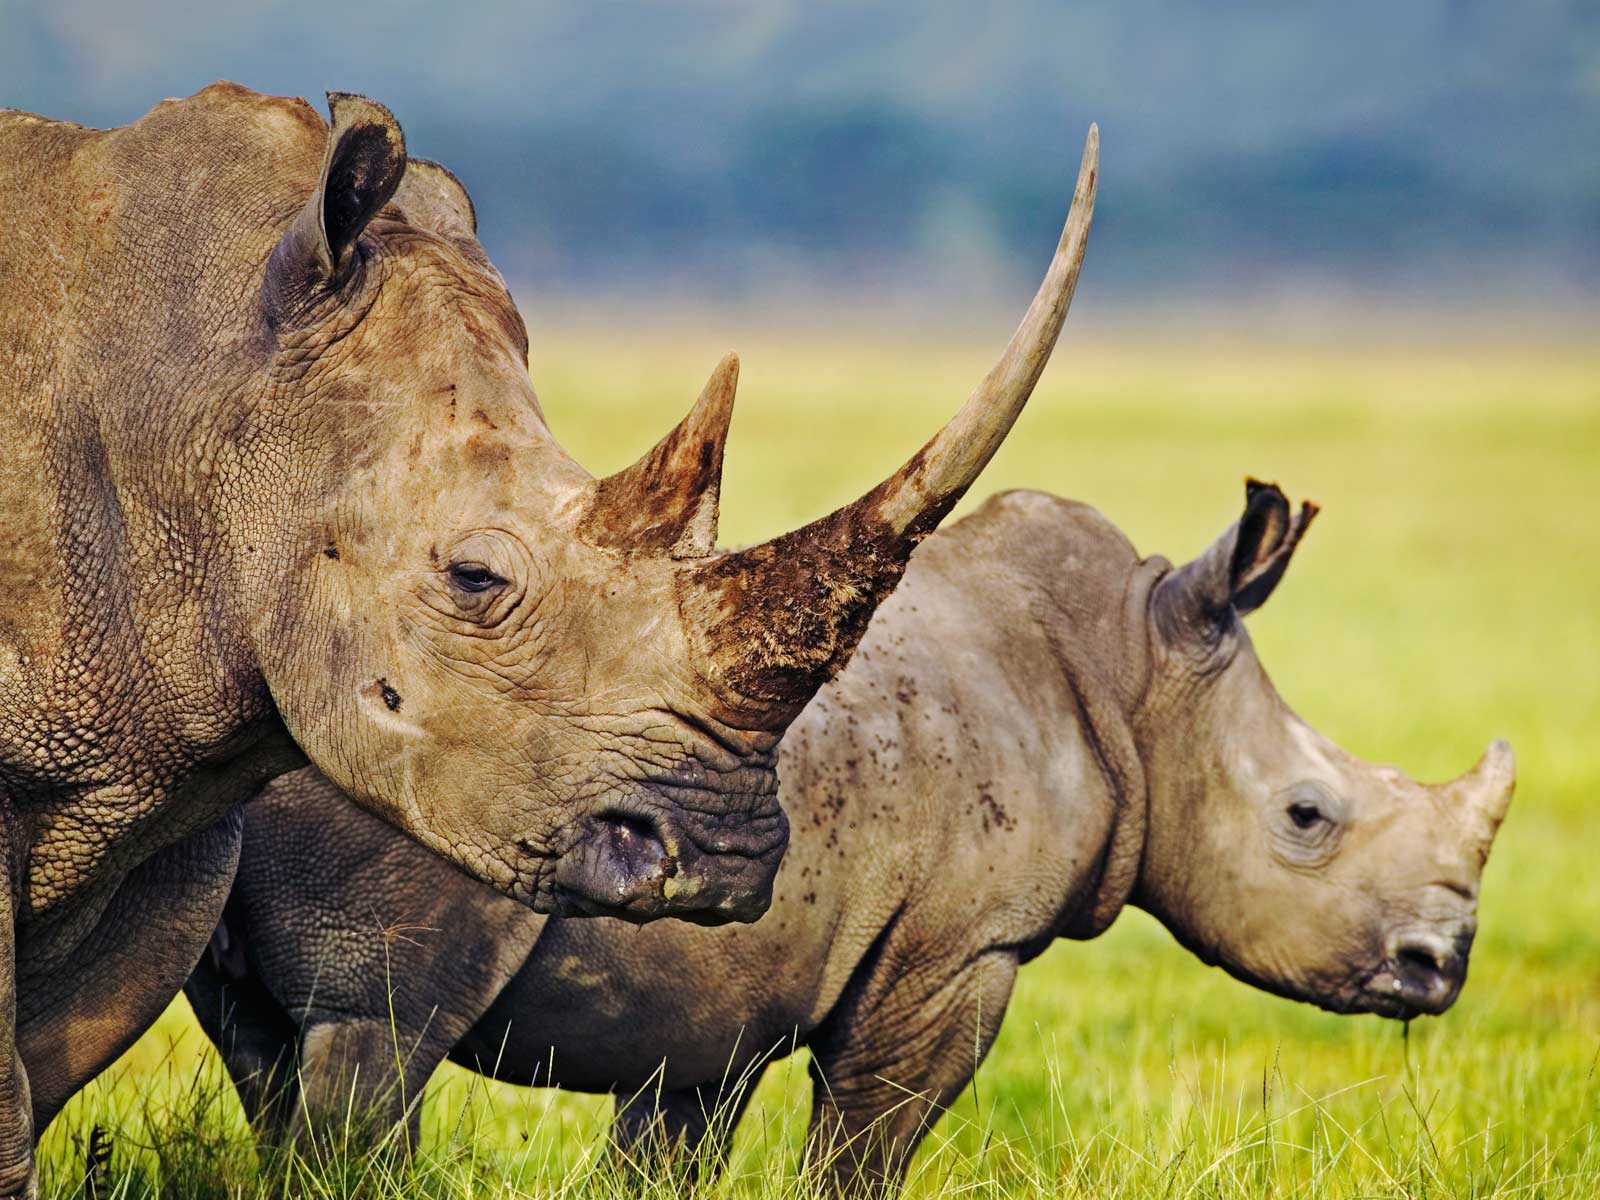 fond d'écran rhinocéros,rhinocéros,animal terrestre,faune,klaxon,rhinocéros blanc